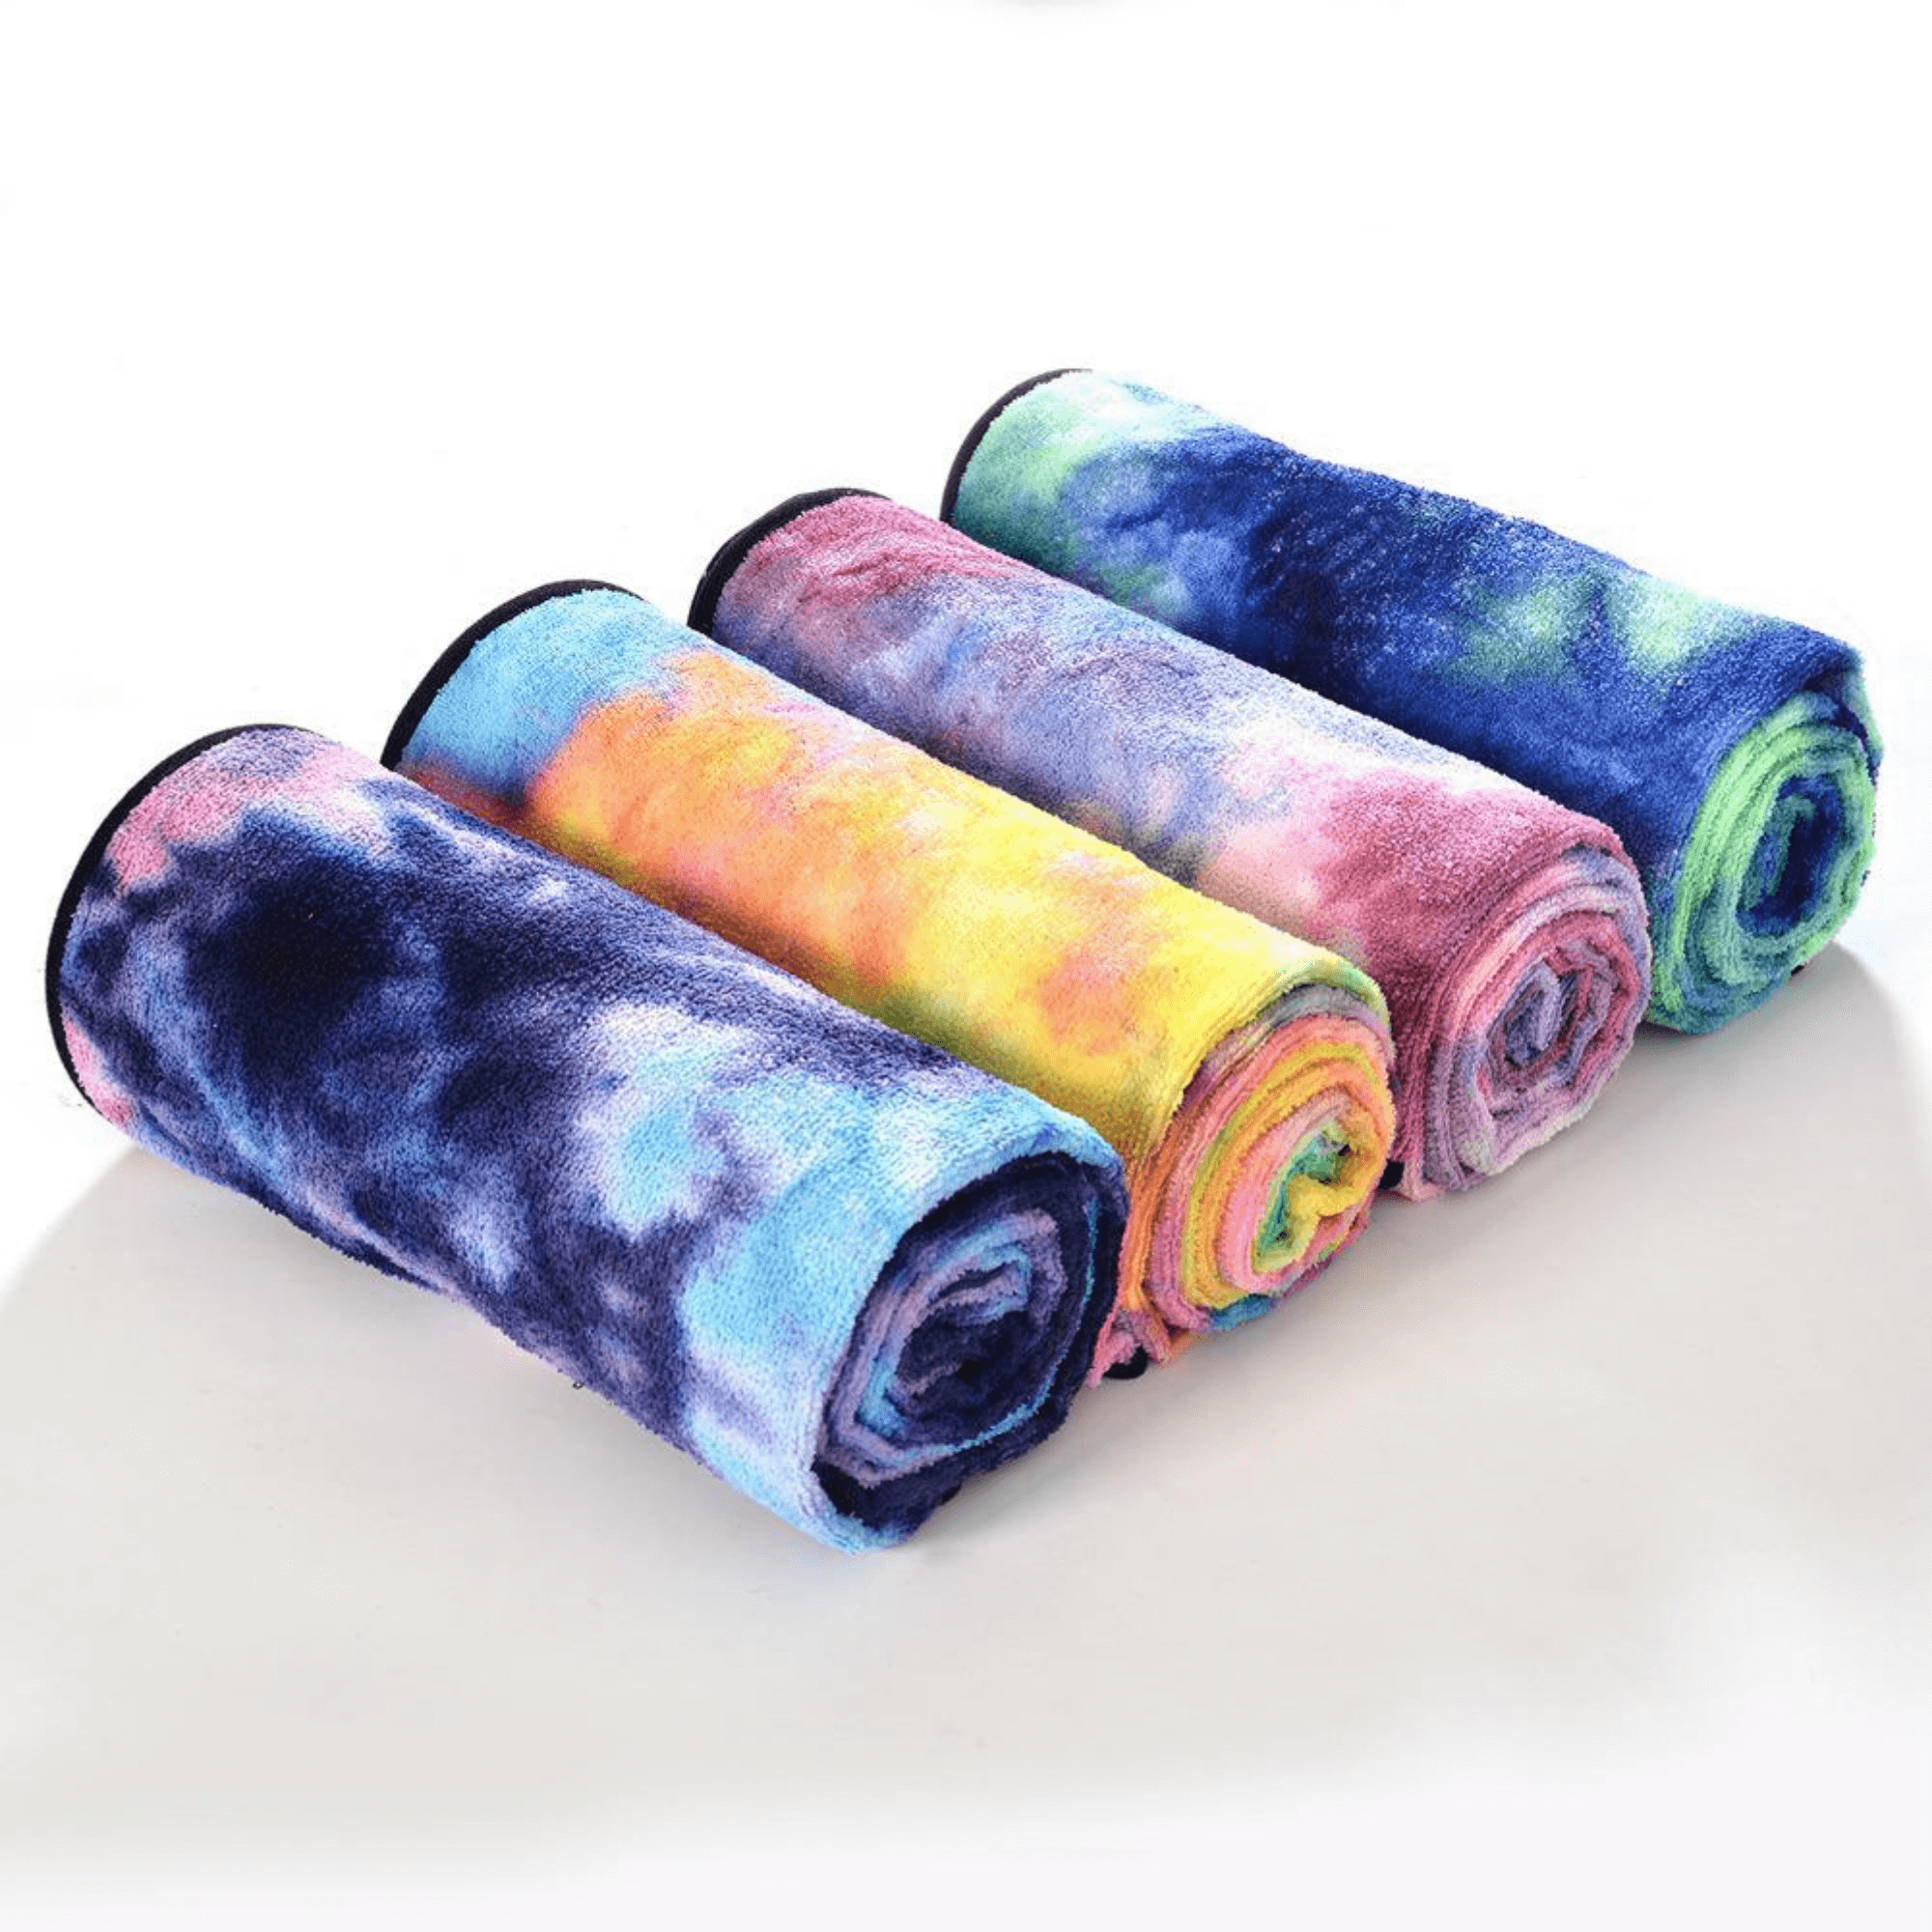 Yoga Towel - Tie-Die Textures Non-Slip Yoga Towel with Bag